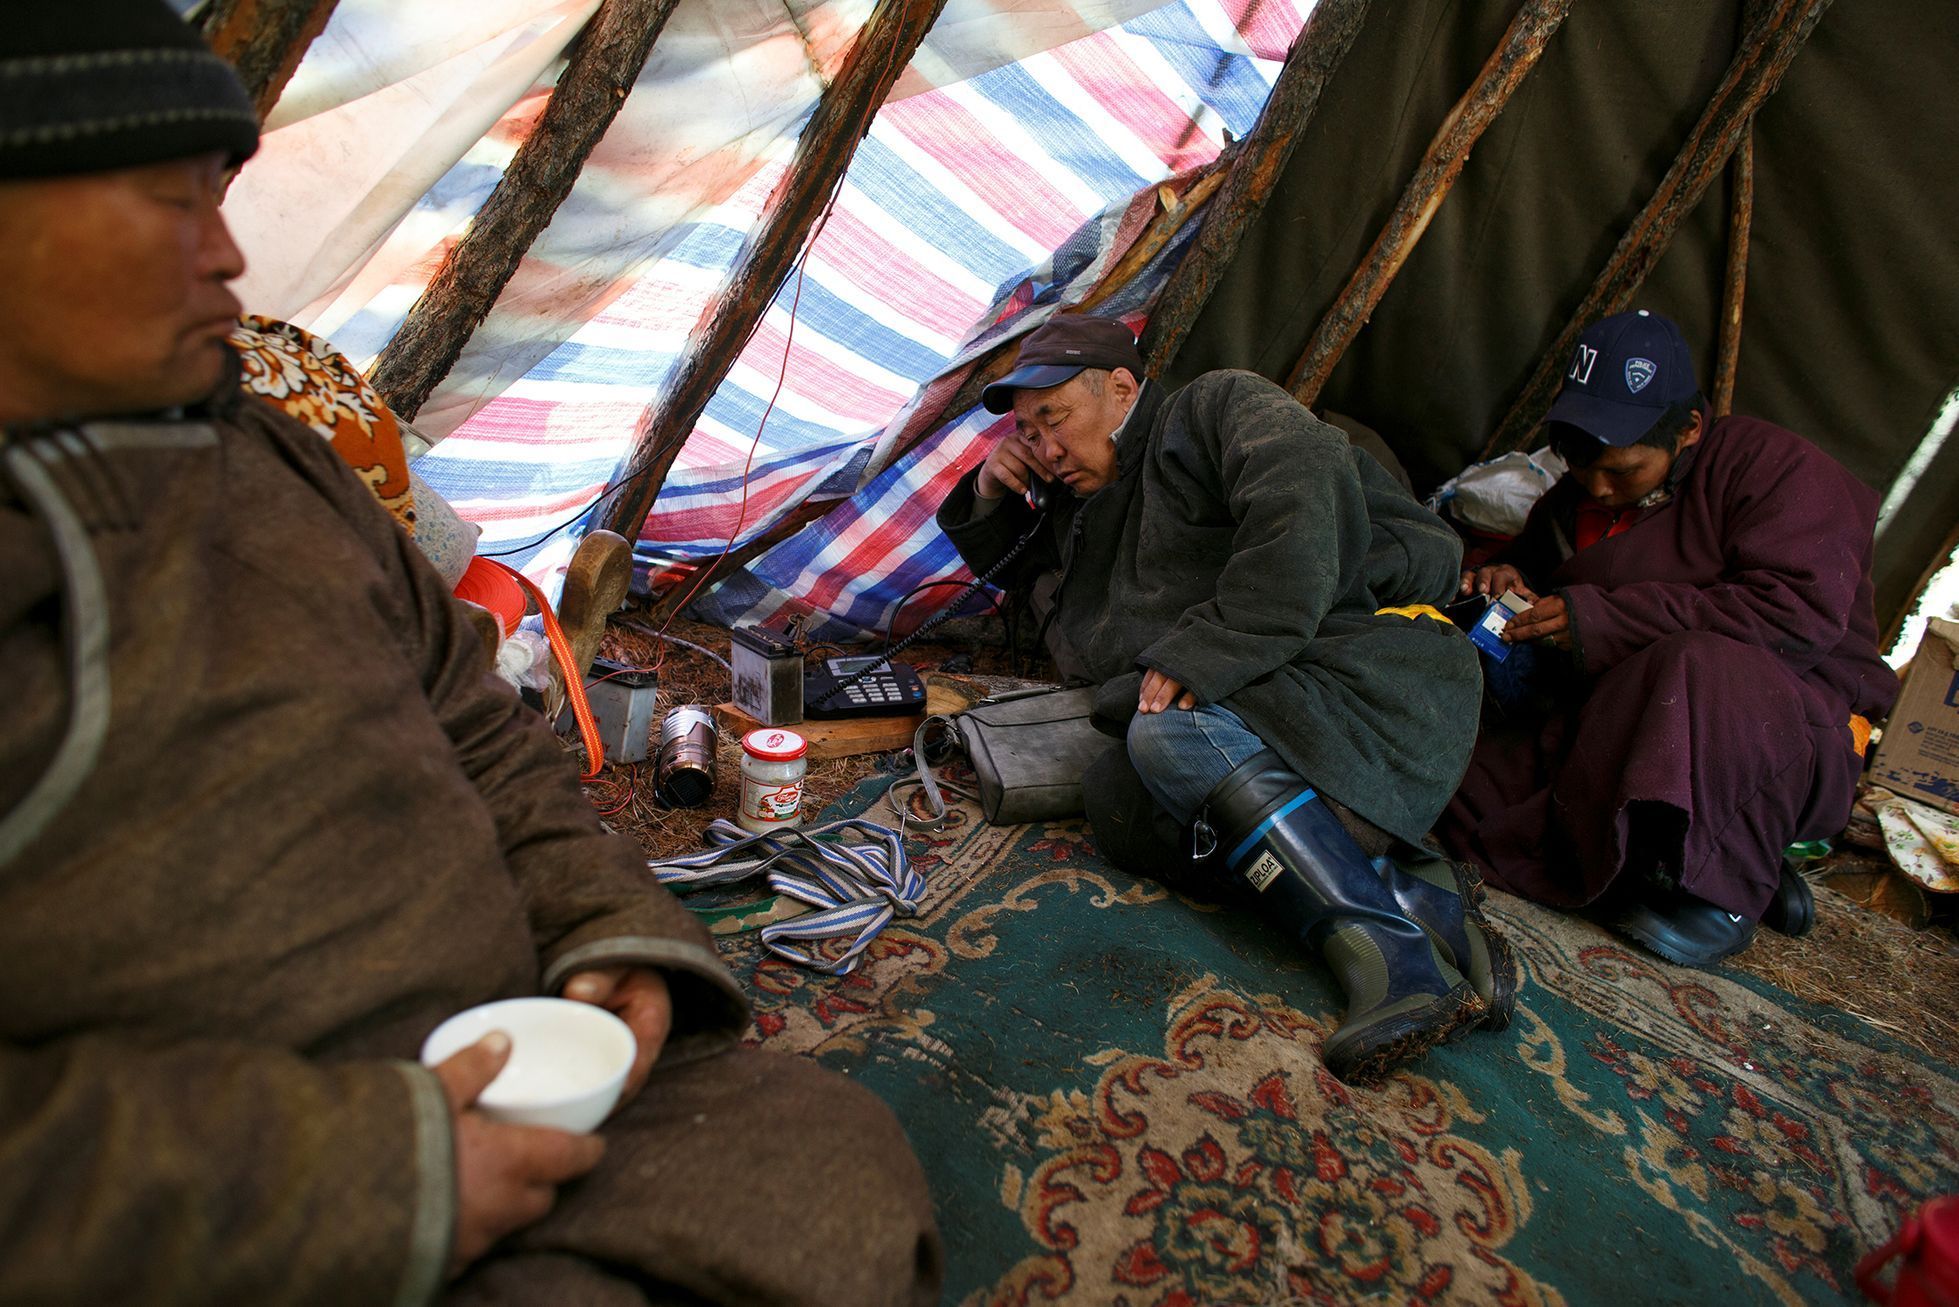 FOTOGALERIE / Život kočovných pastýřů v Mongolsku / Reuters / rok 2018 / 13